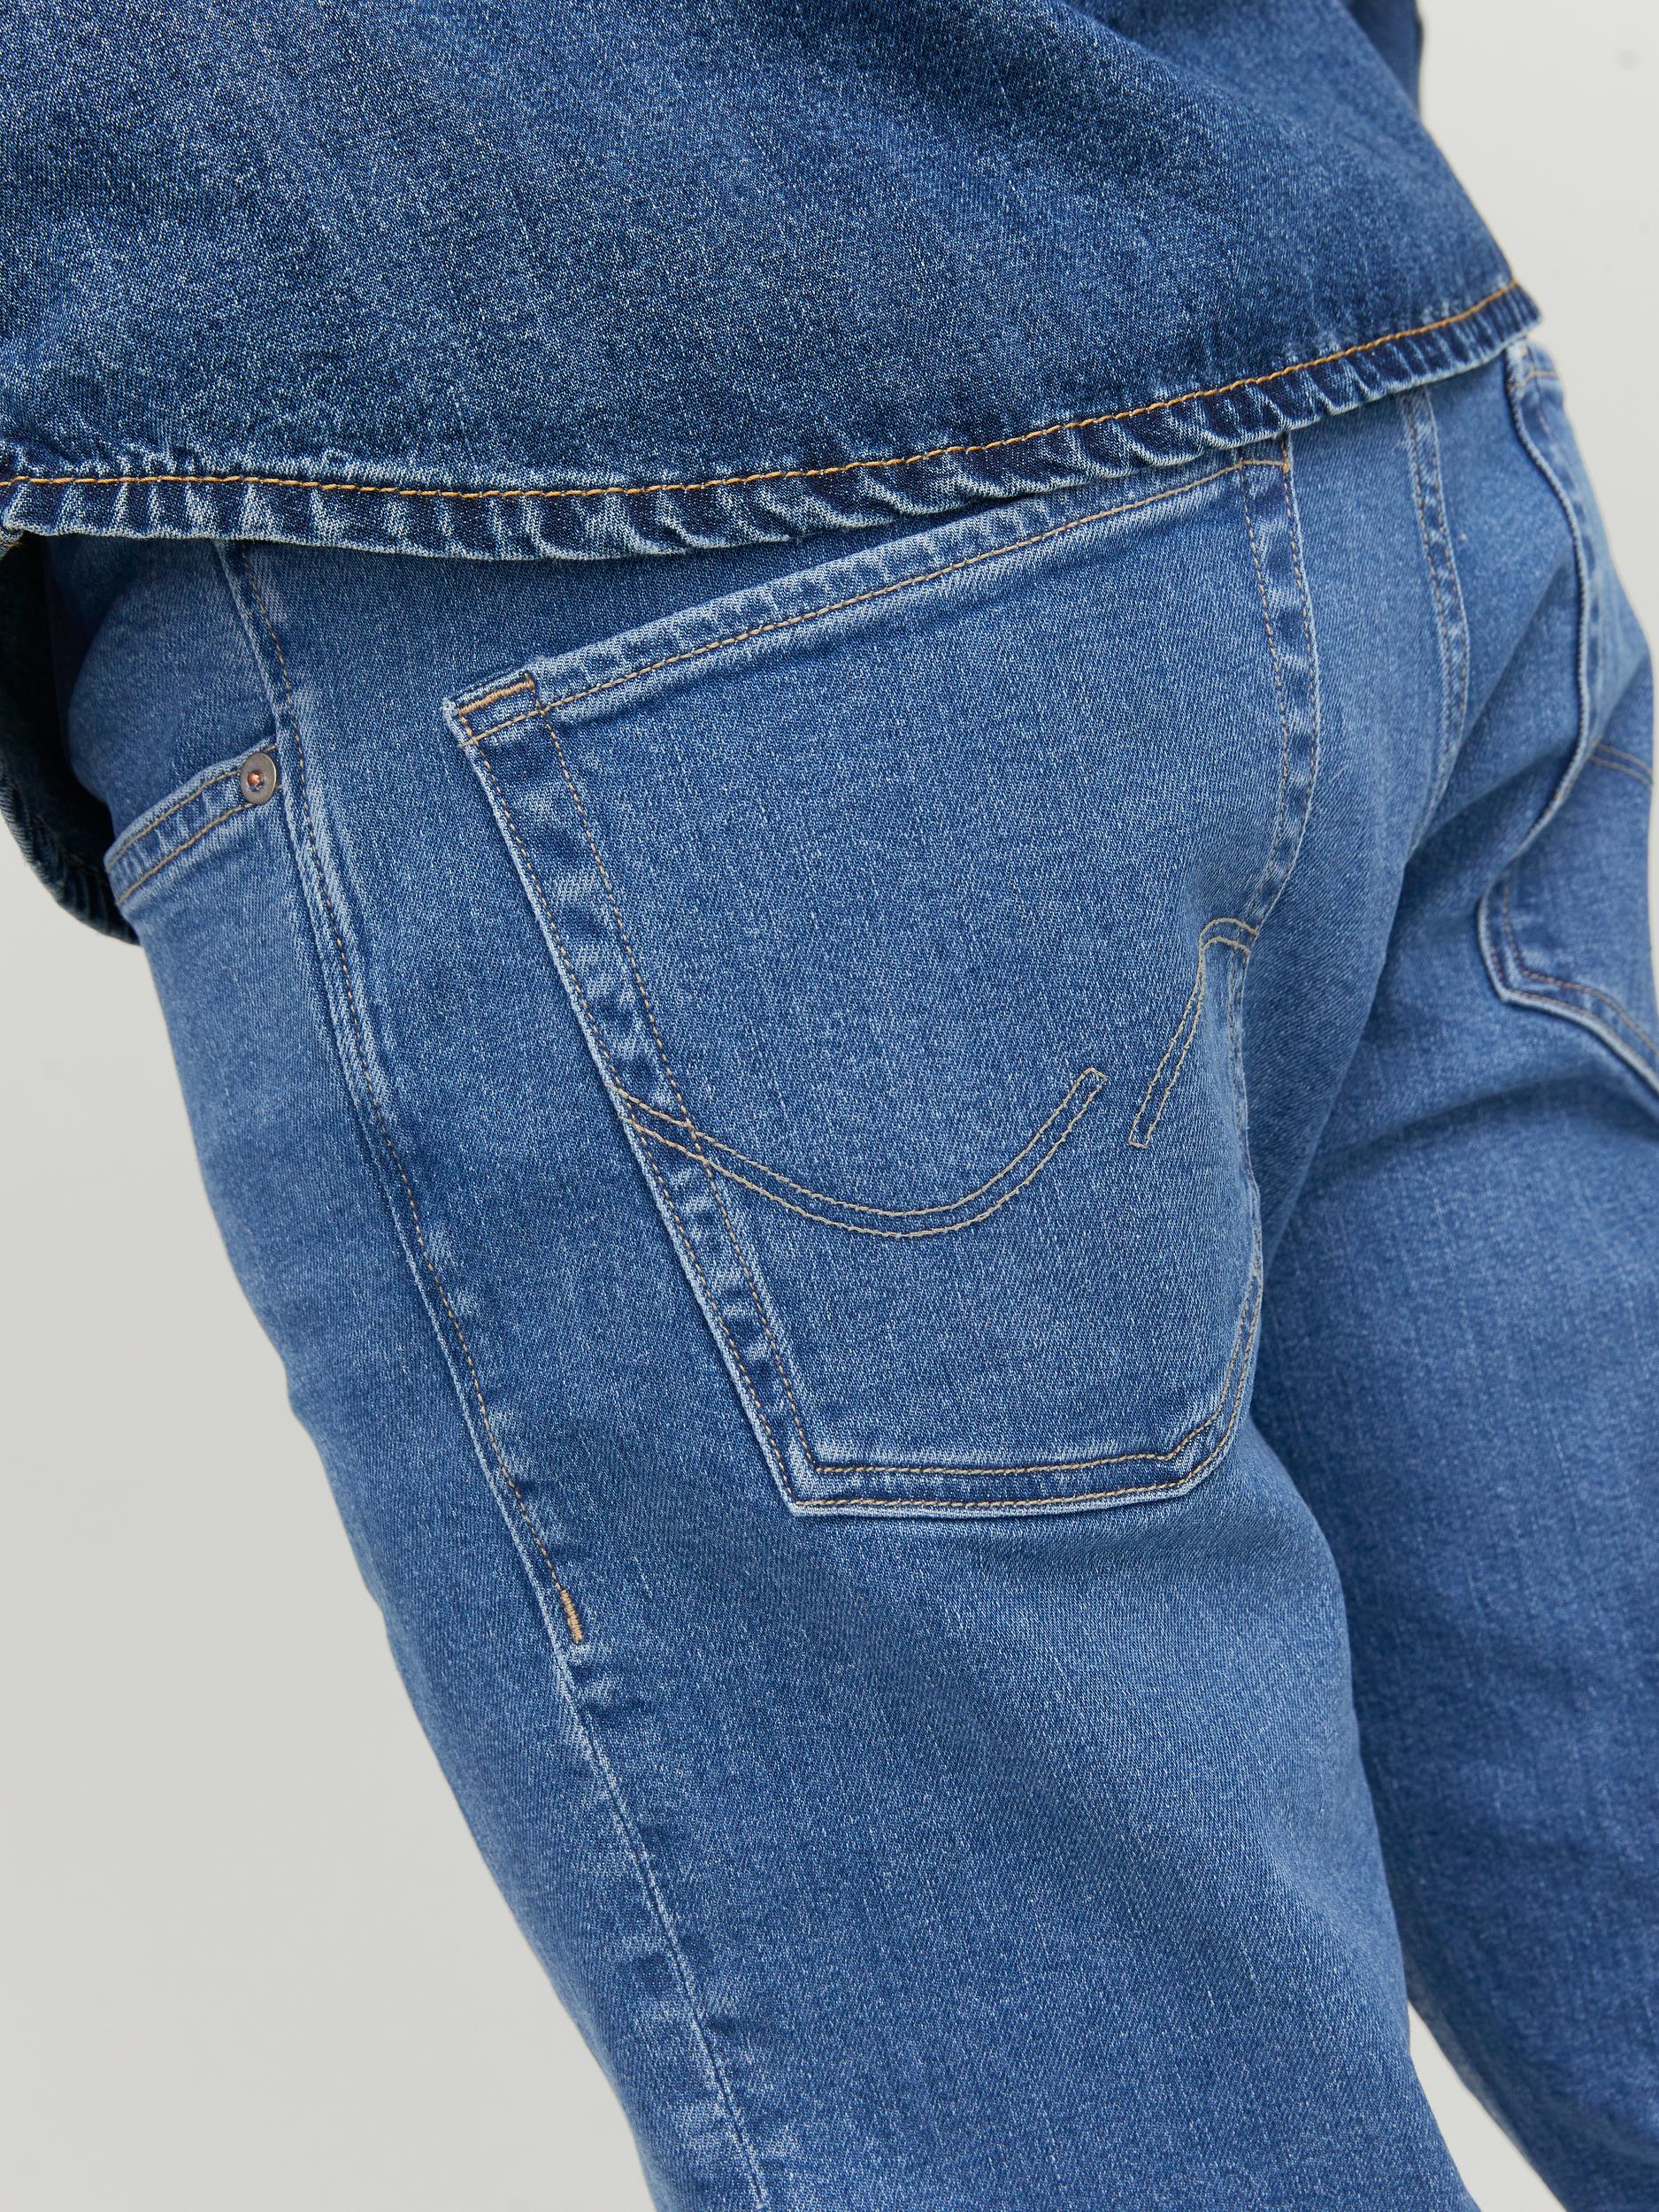 Jack & Jones Mike Original AM 385 Comfort Fit Jeans Blue Denim - Raw Menswear